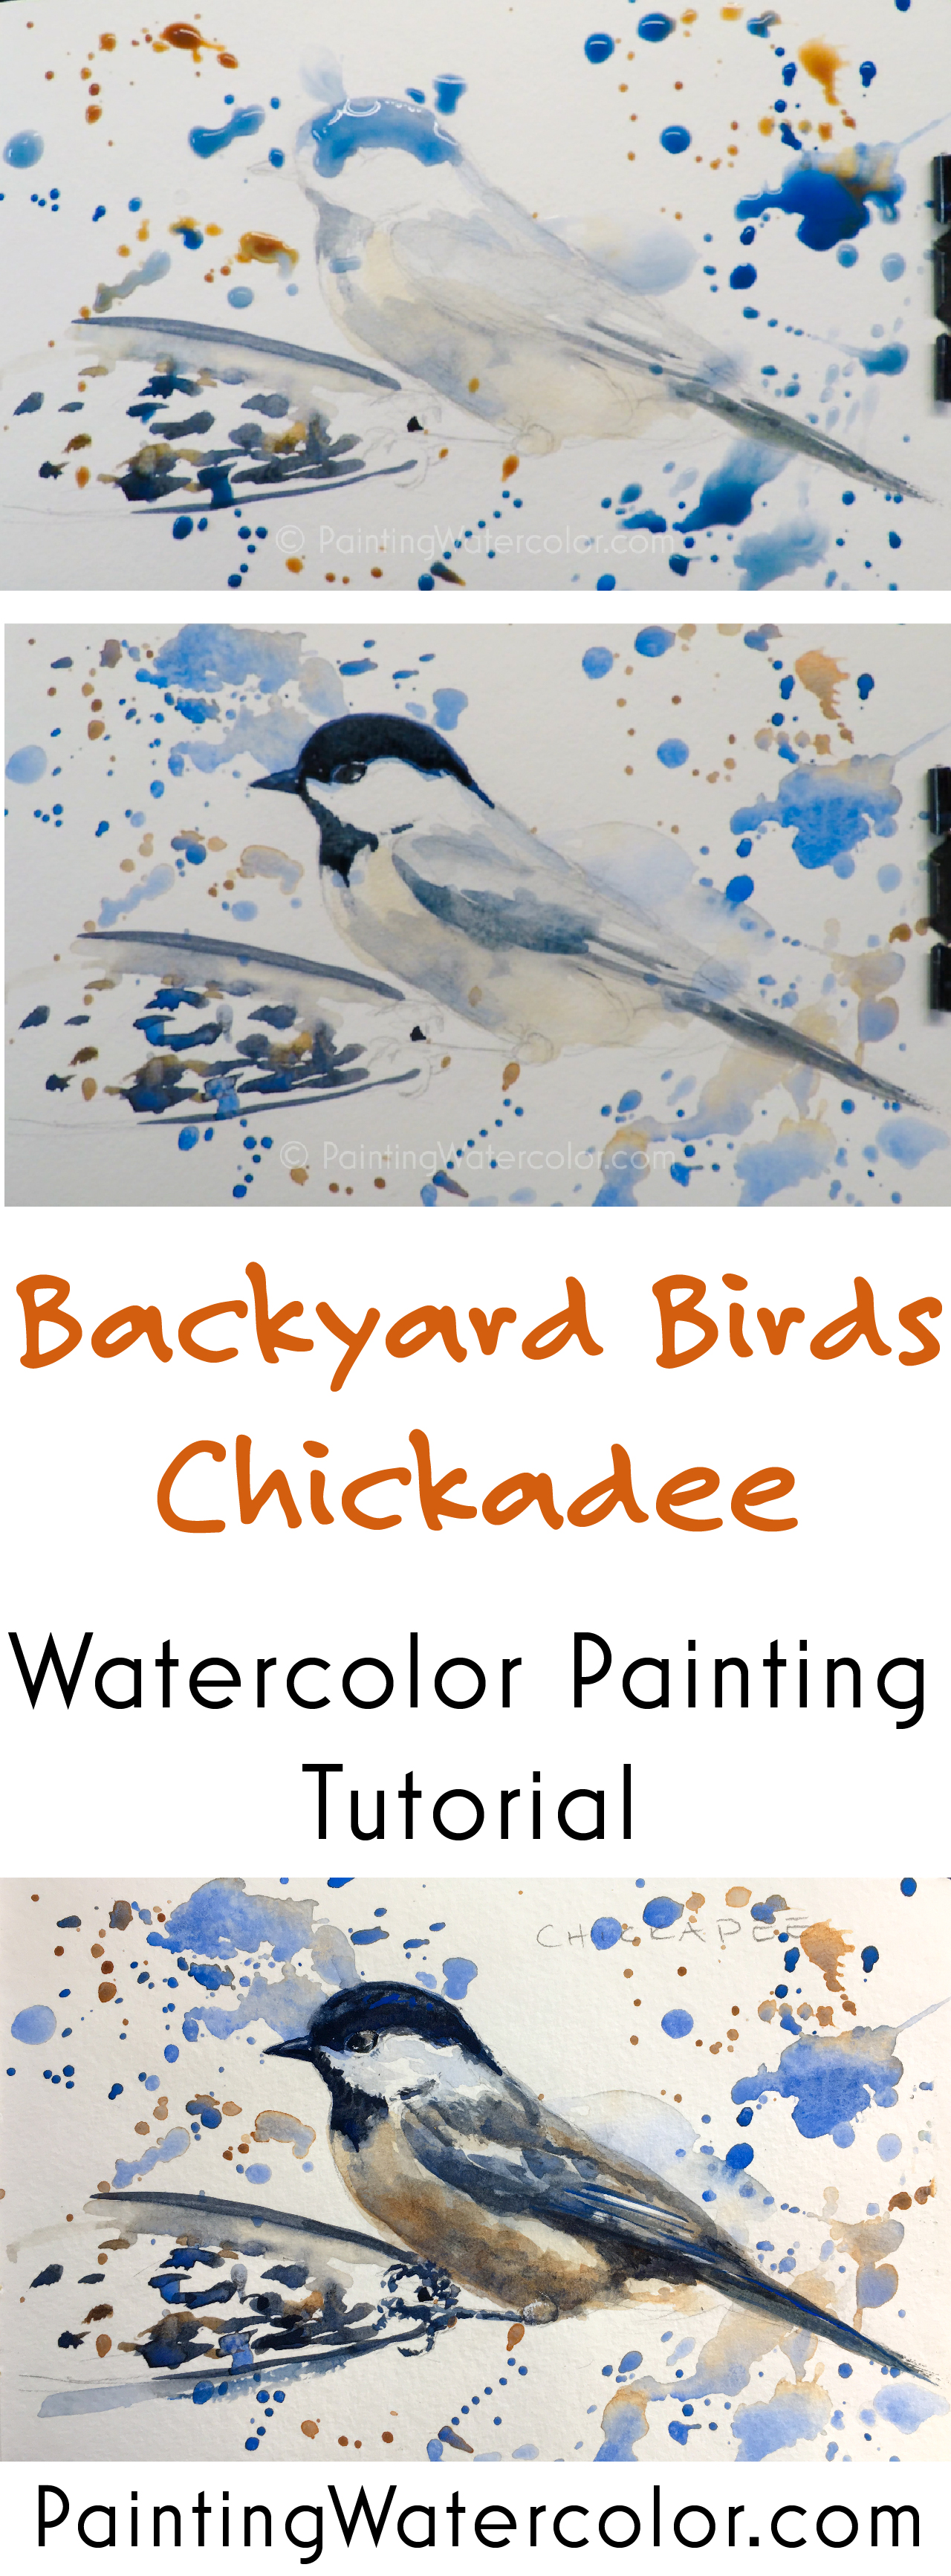 Backyard Bird Sketch, Chickadee watercolor painting tutorial by Jennifer Branch